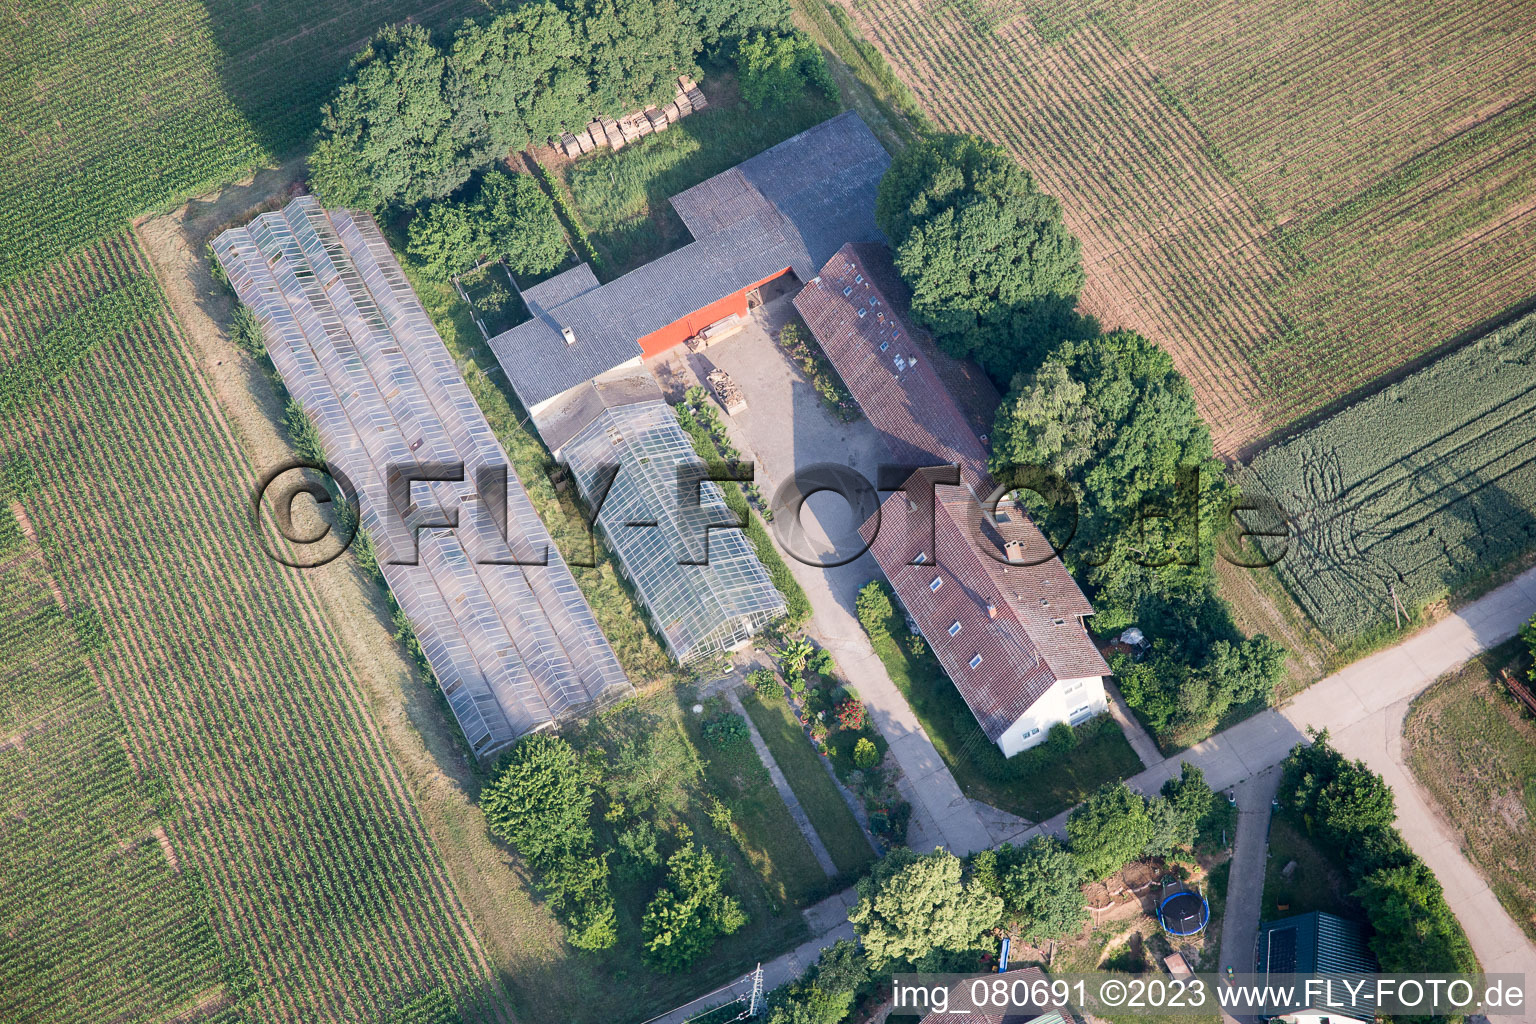 Drone recording of Ottersheim bei Landau in the state Rhineland-Palatinate, Germany